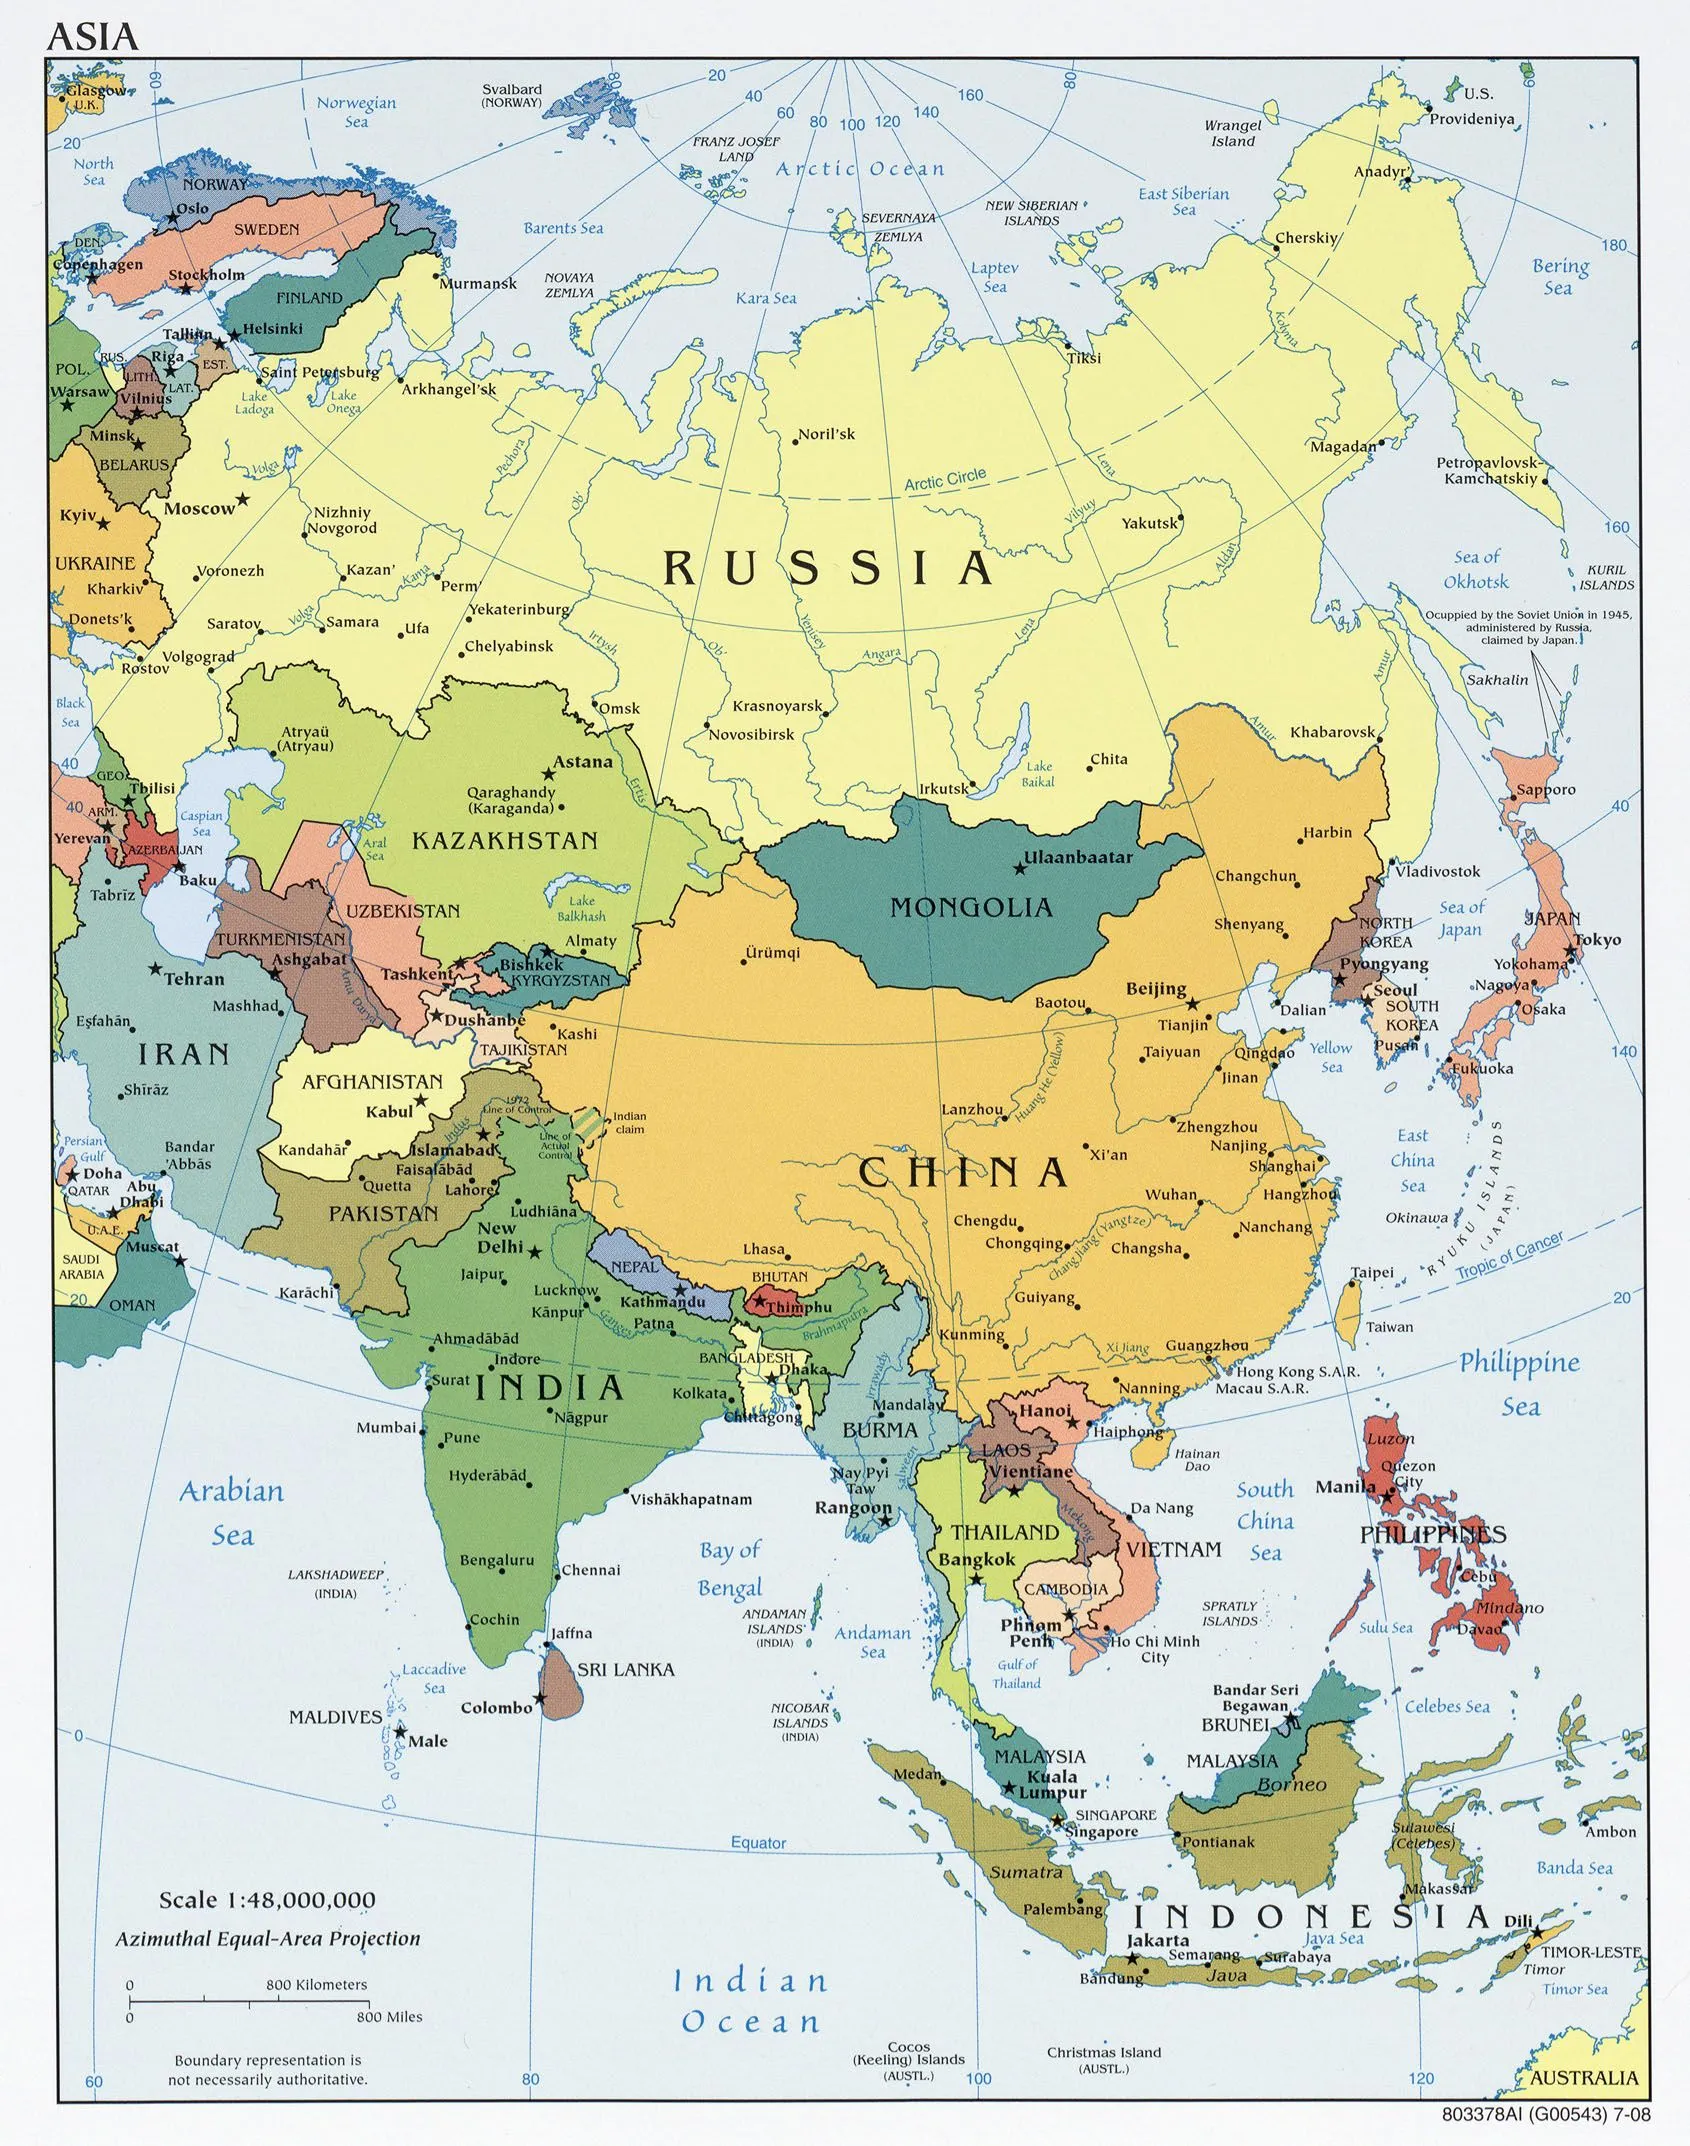 Mapa Politico de Asia 2008 - Tamaño completo